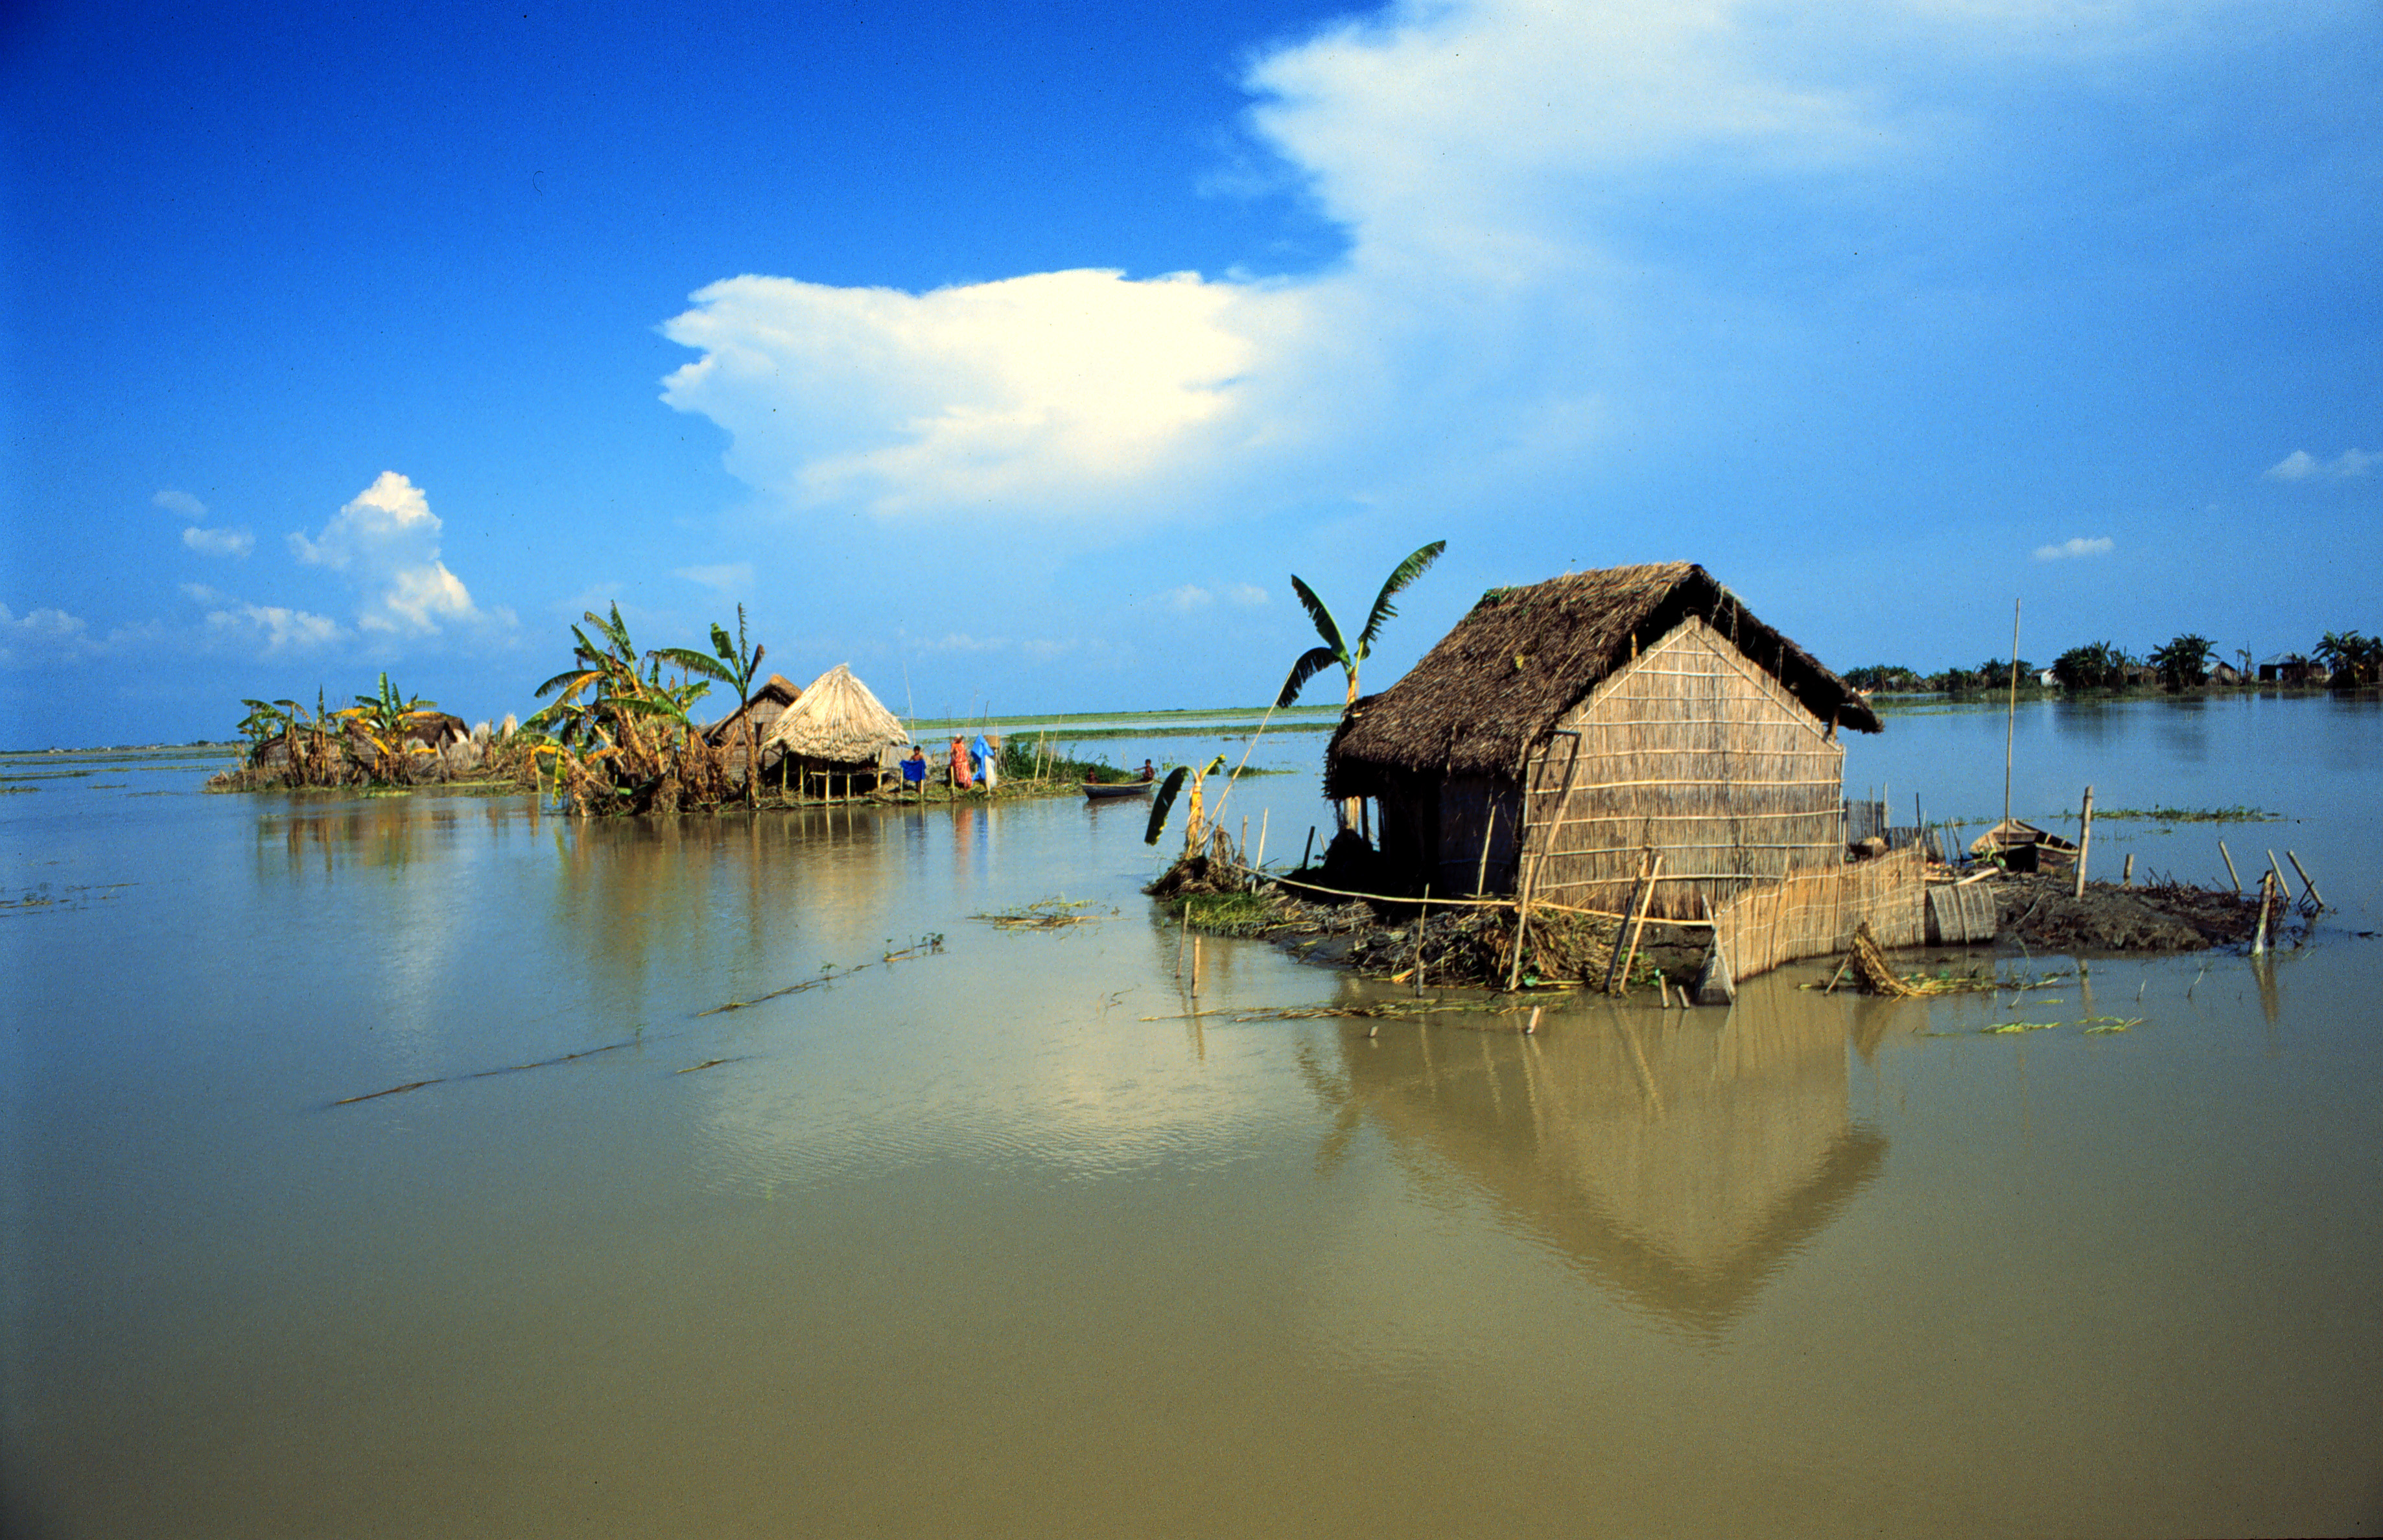 http://www.asociacioncaliope.org/imagenes/floodedBangladesh.jpg